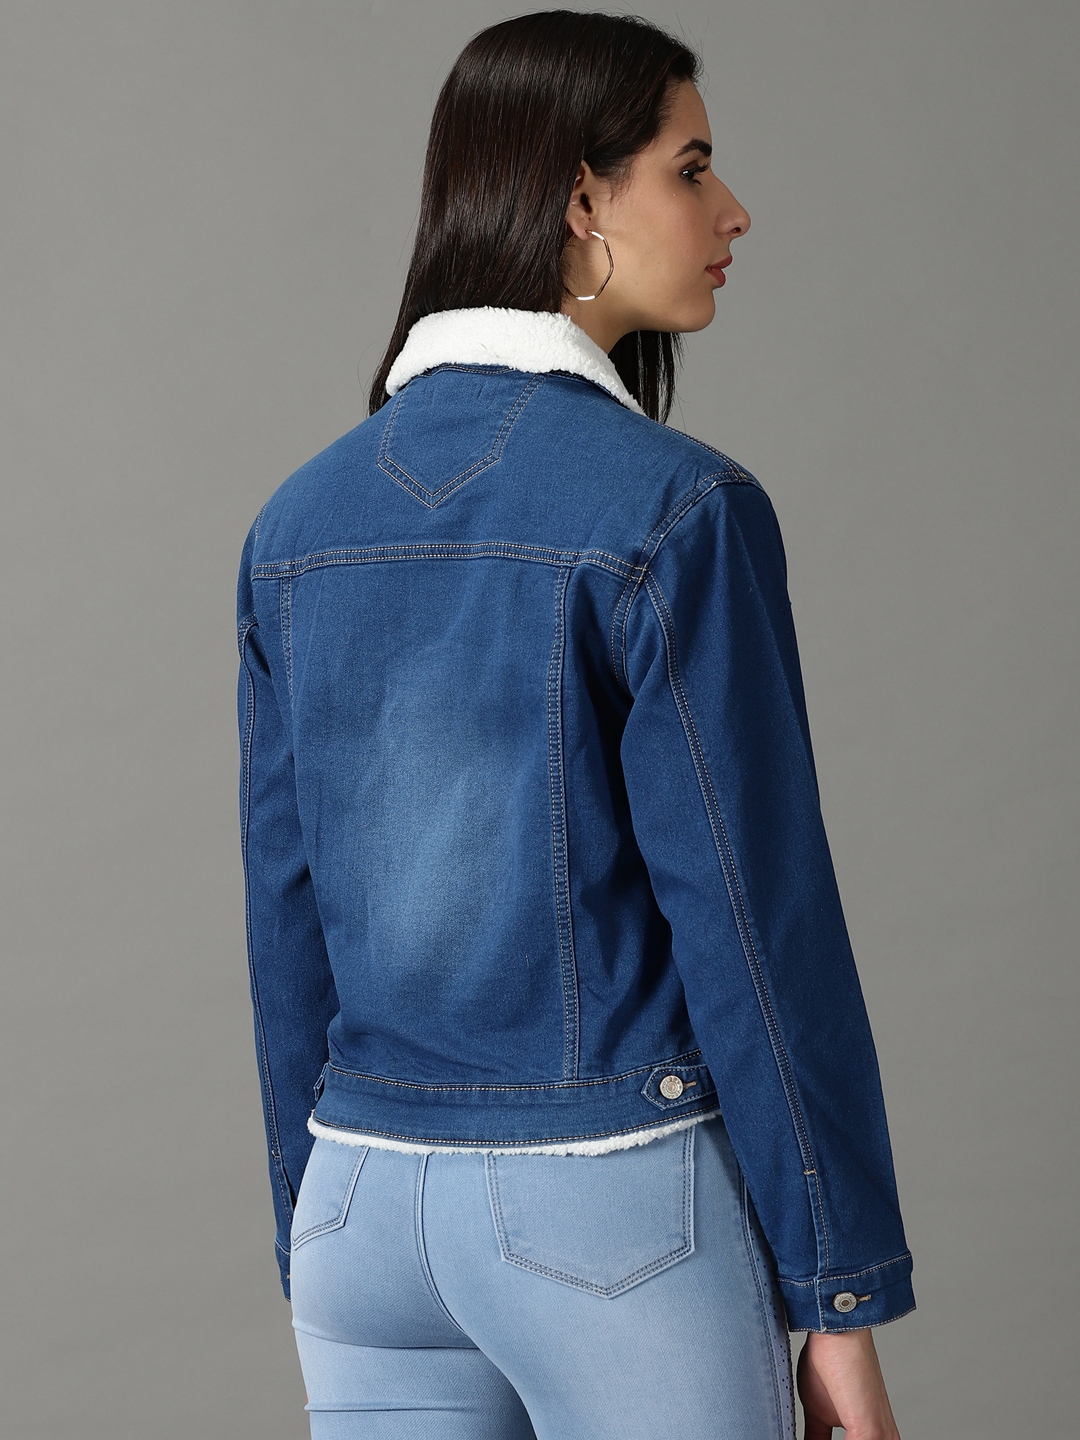 Showoff | SHOWOFF Women's Spread Collar Solid Blue Denim Jacket 3